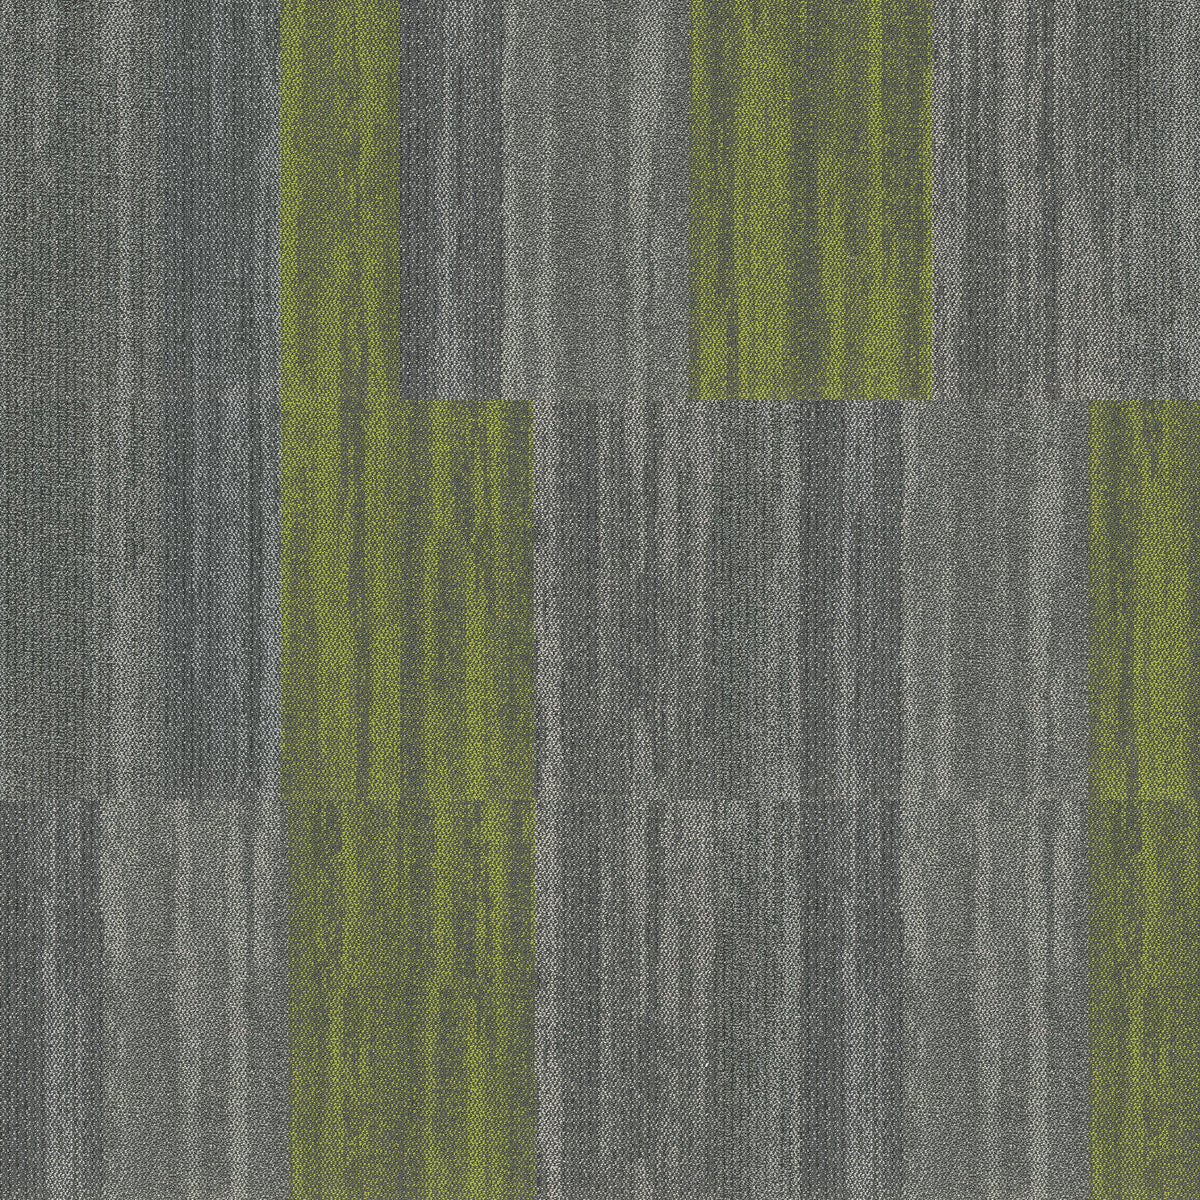 Shaw Contract - Places - Sea Edge Tile - Carpet Tile - Adventure Green